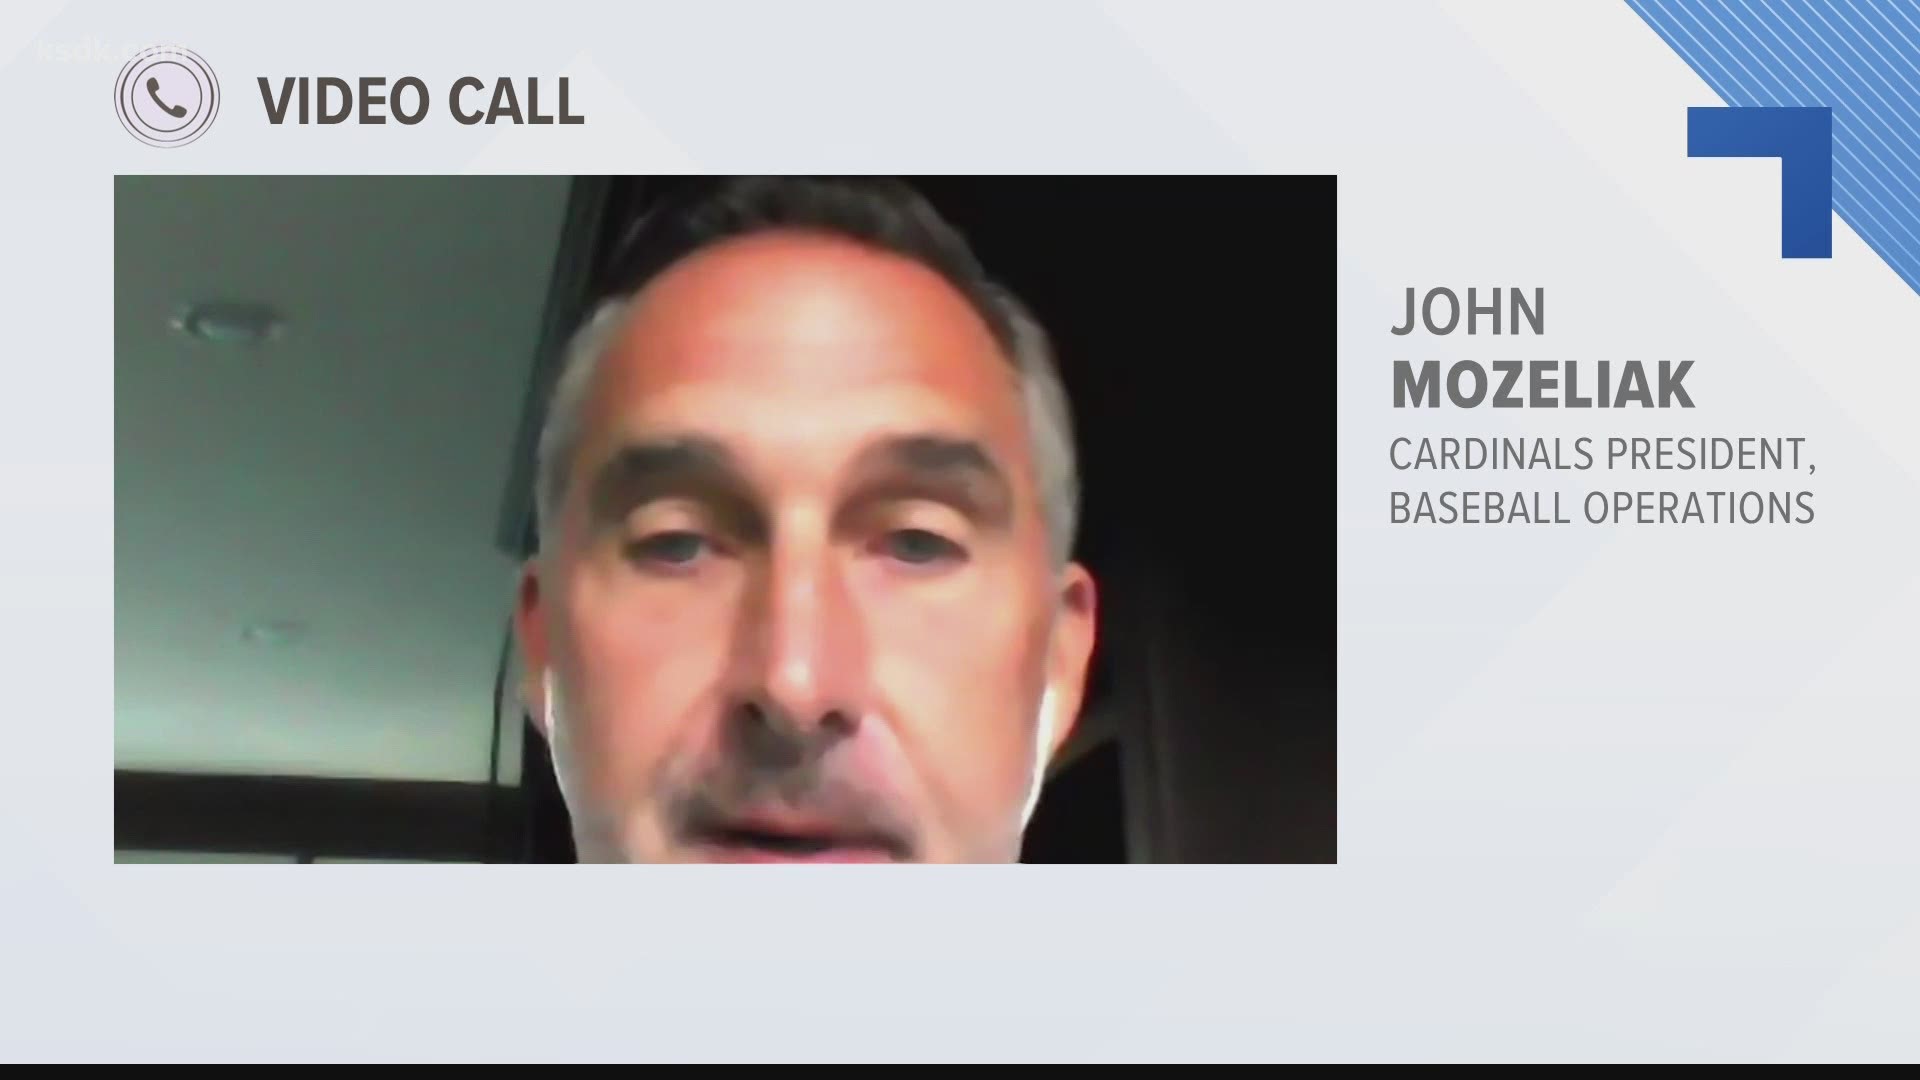 5 On Your Side spoke with Cardinals President of Baseball Operations John Mozeliak